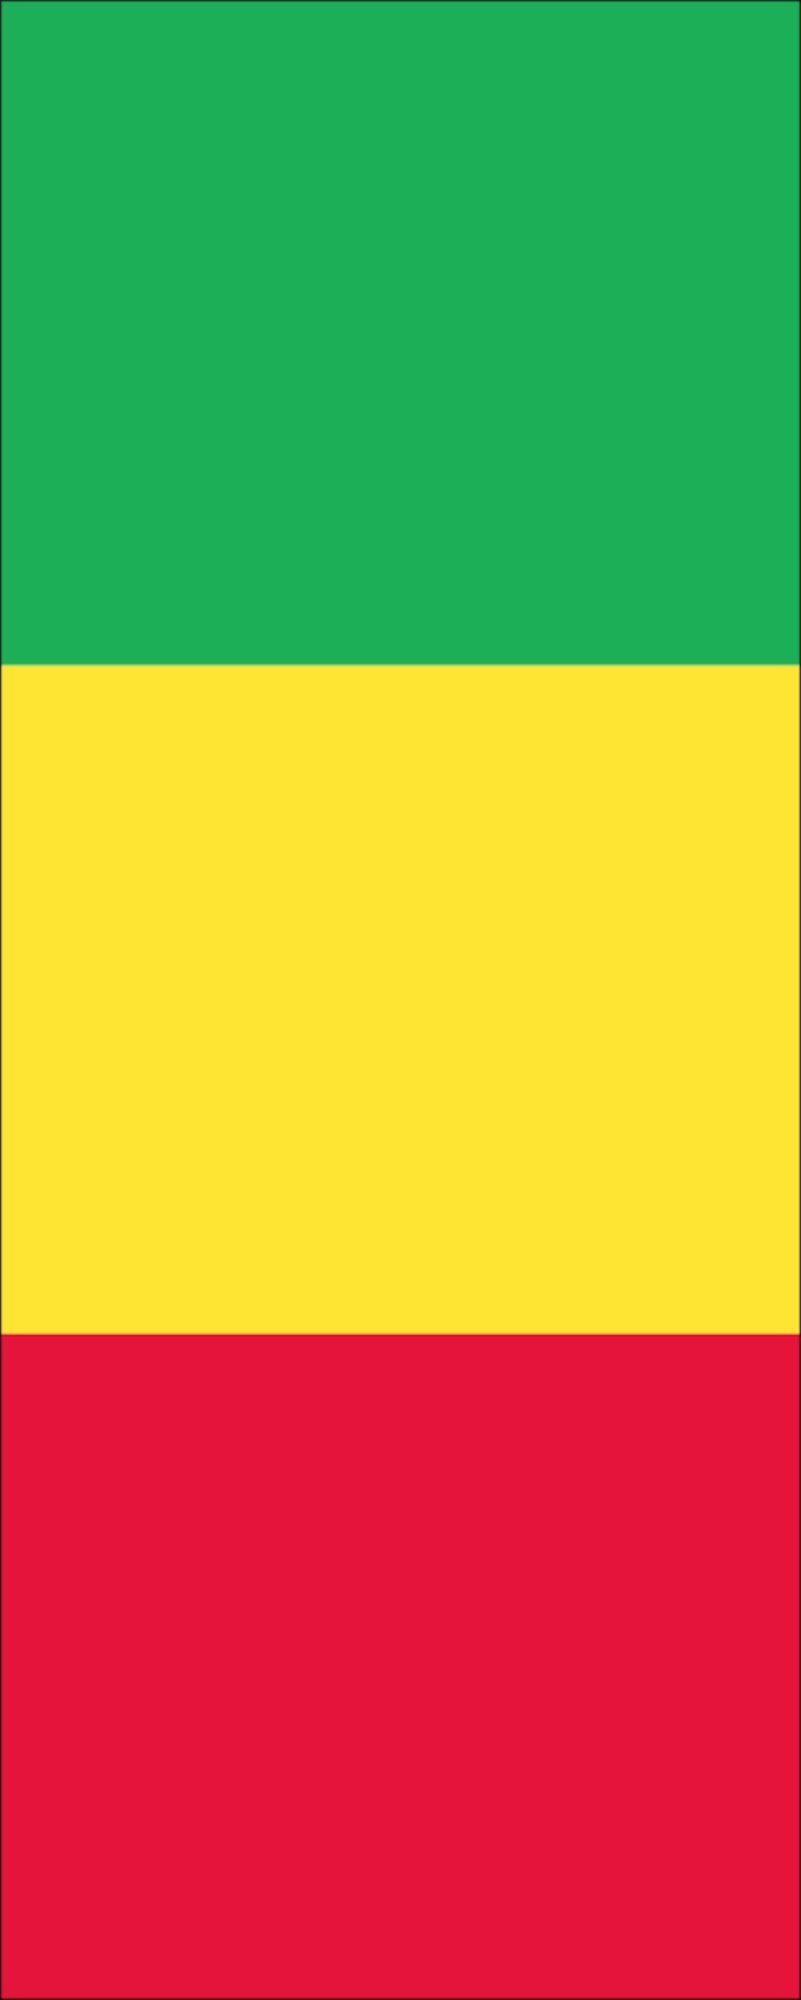 flaggenmeer Flagge Mali 160 g/m² Hochformat